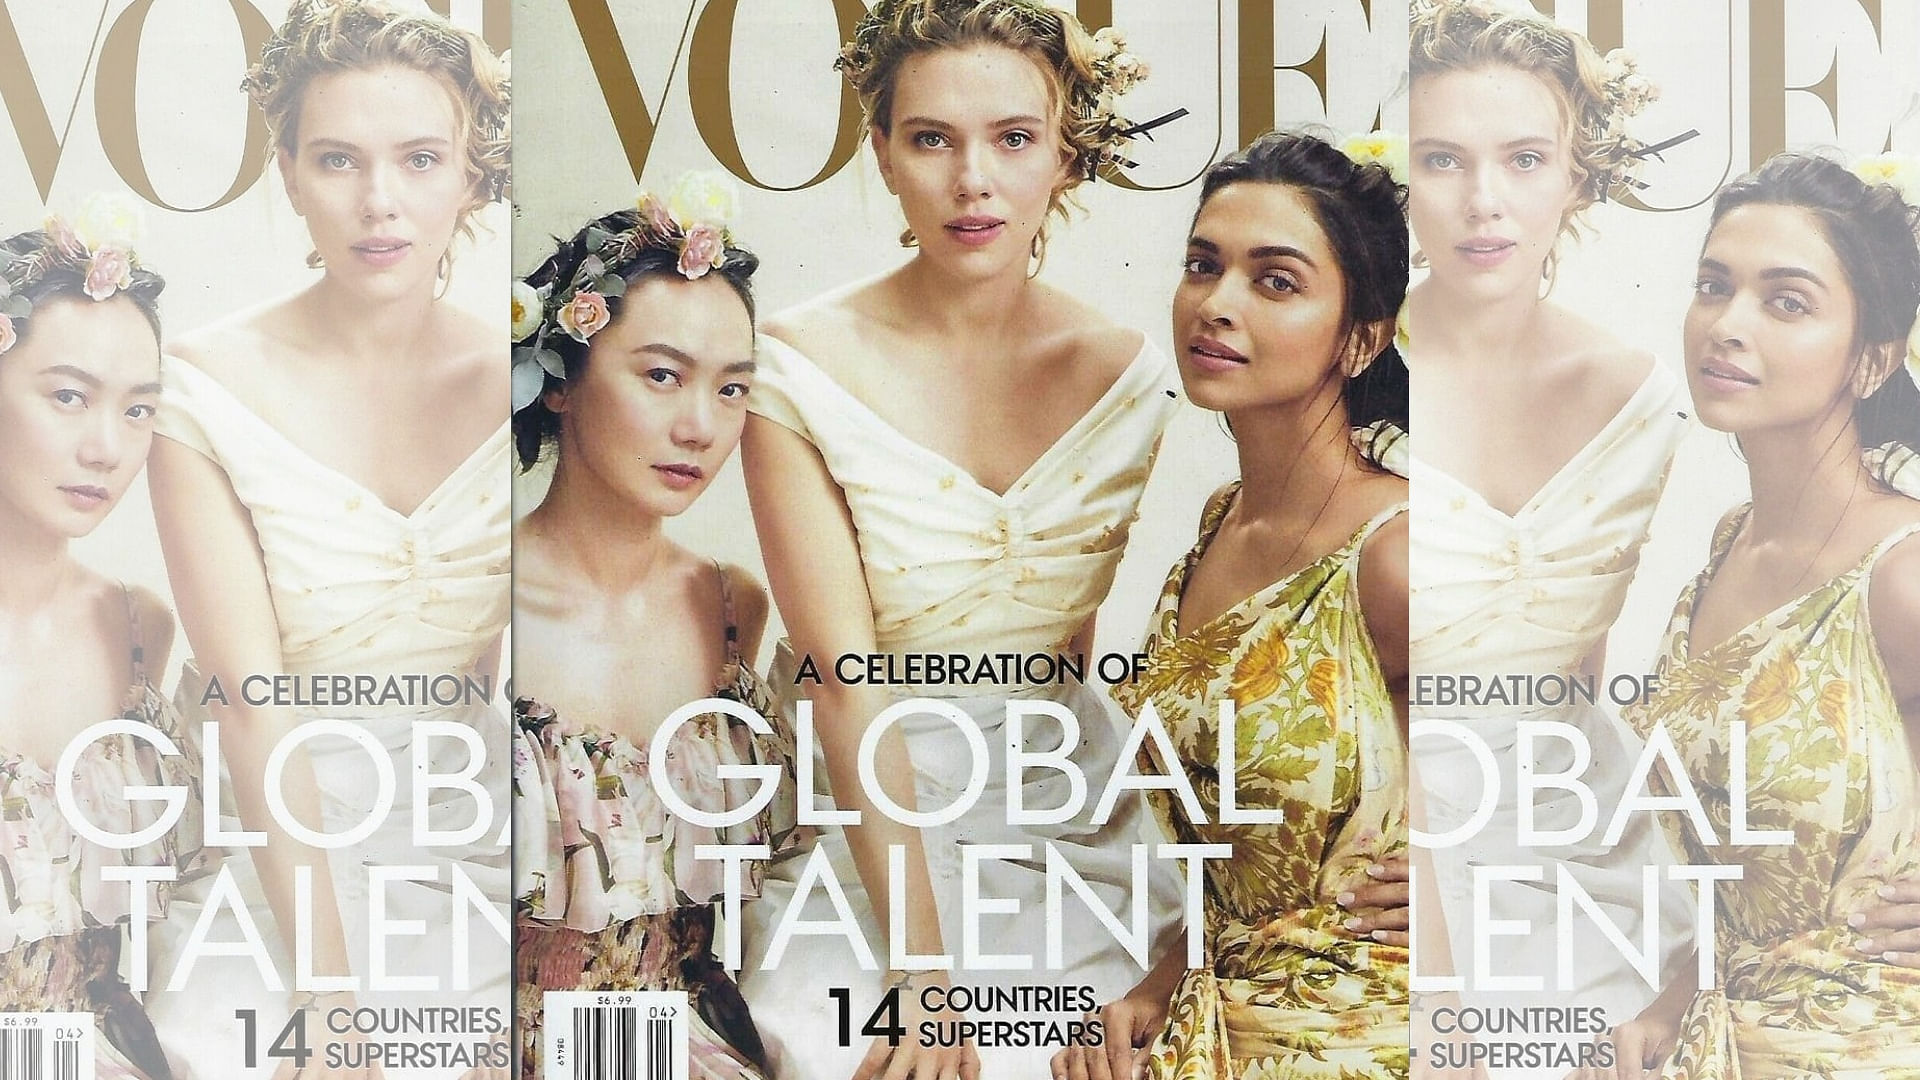 Deepika Padukone, Scarlett Johansson, and Bae Doona pose for the Vogue US April cover.